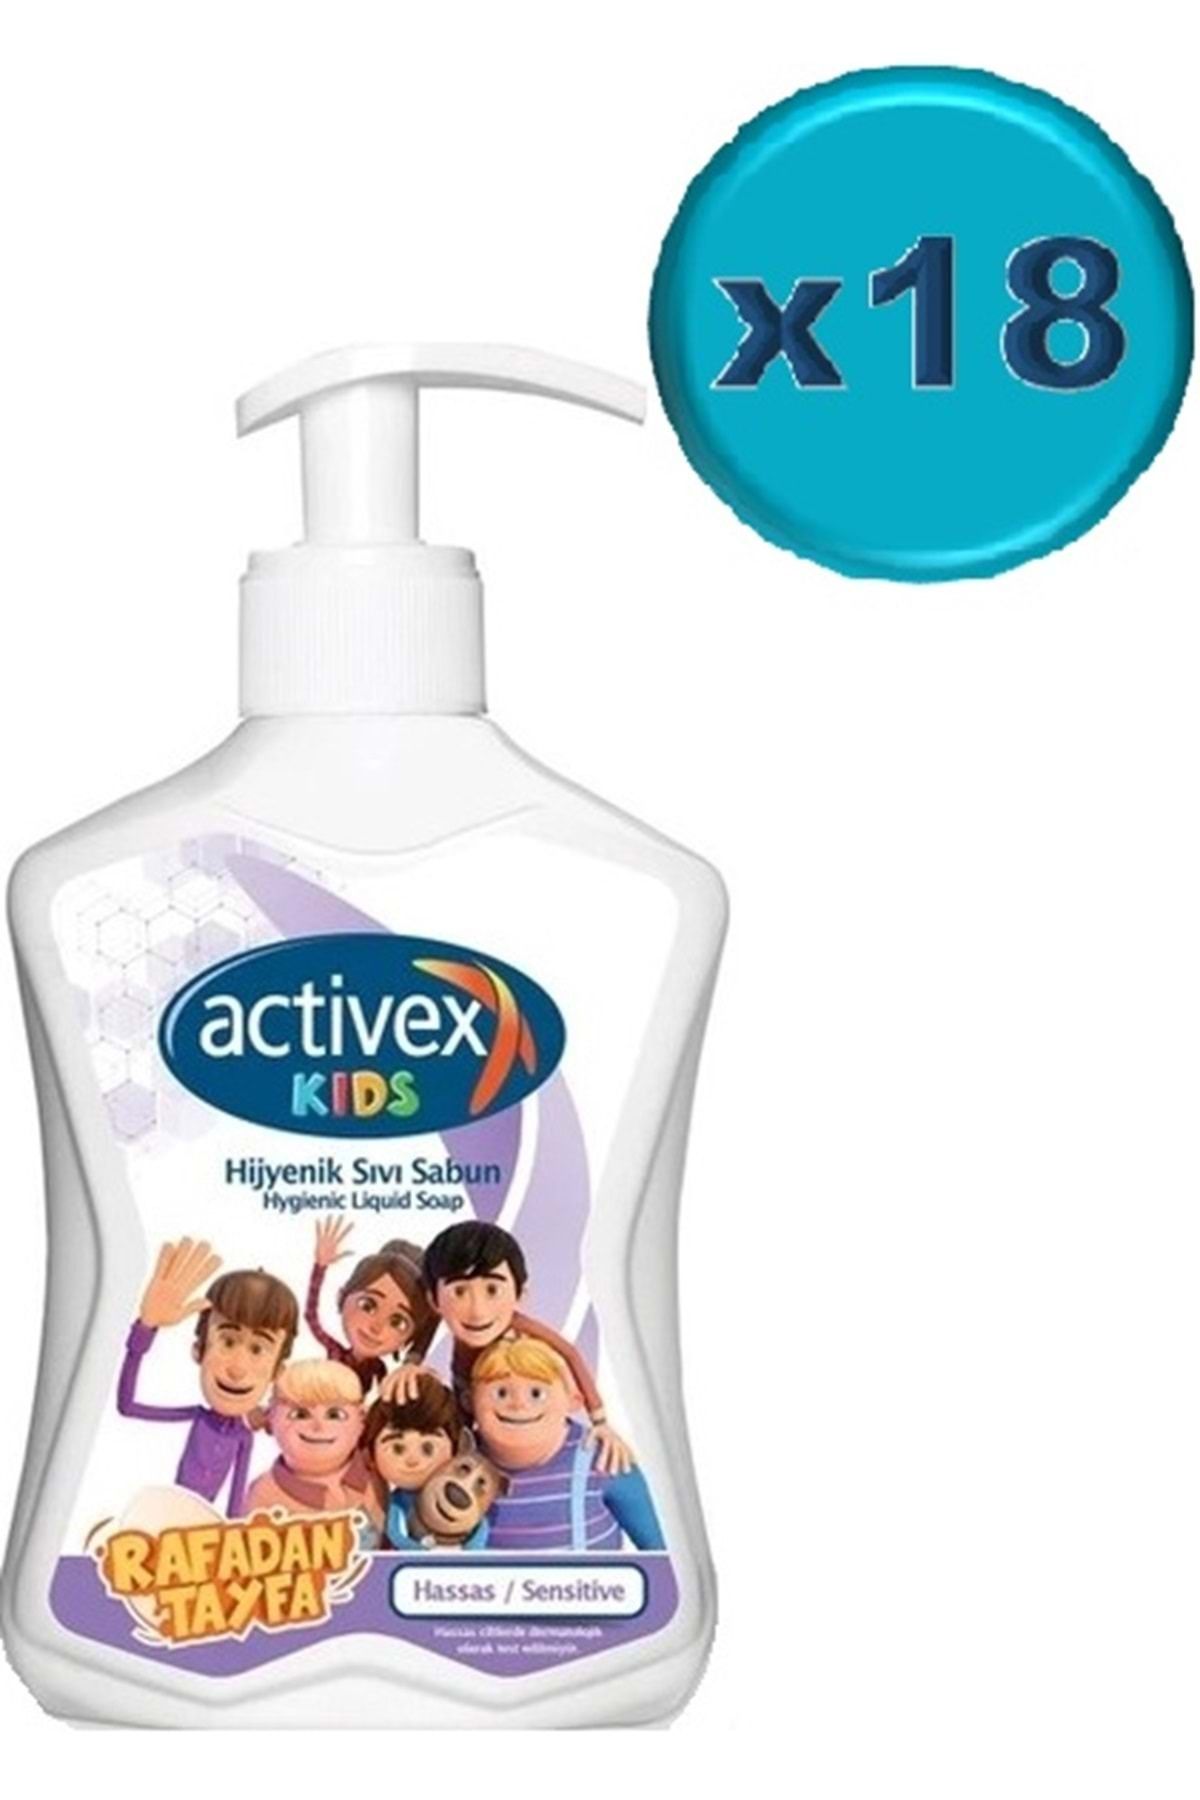 Activex Antibakteriyel Sıvı Sabun Hassas/sensitive 300ml Pompalı (RAFADAN TAYFA SERİSİ) (18 Lİ SET)